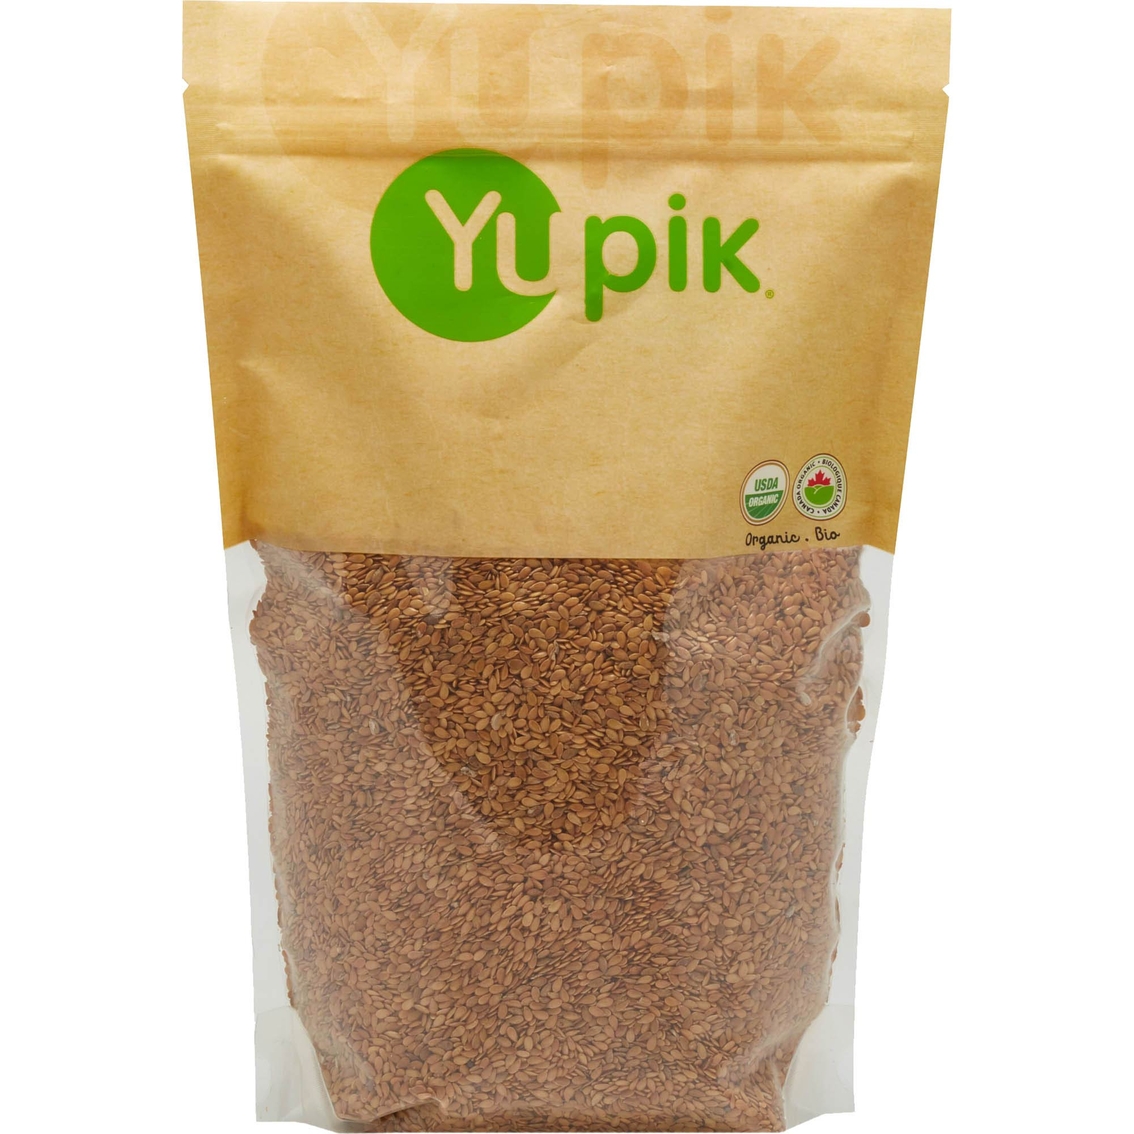 Yupik Organic Golden Flax Seeds, Gluten Free, GMO Free, Vegan 6 bags, 2.2 lb. each